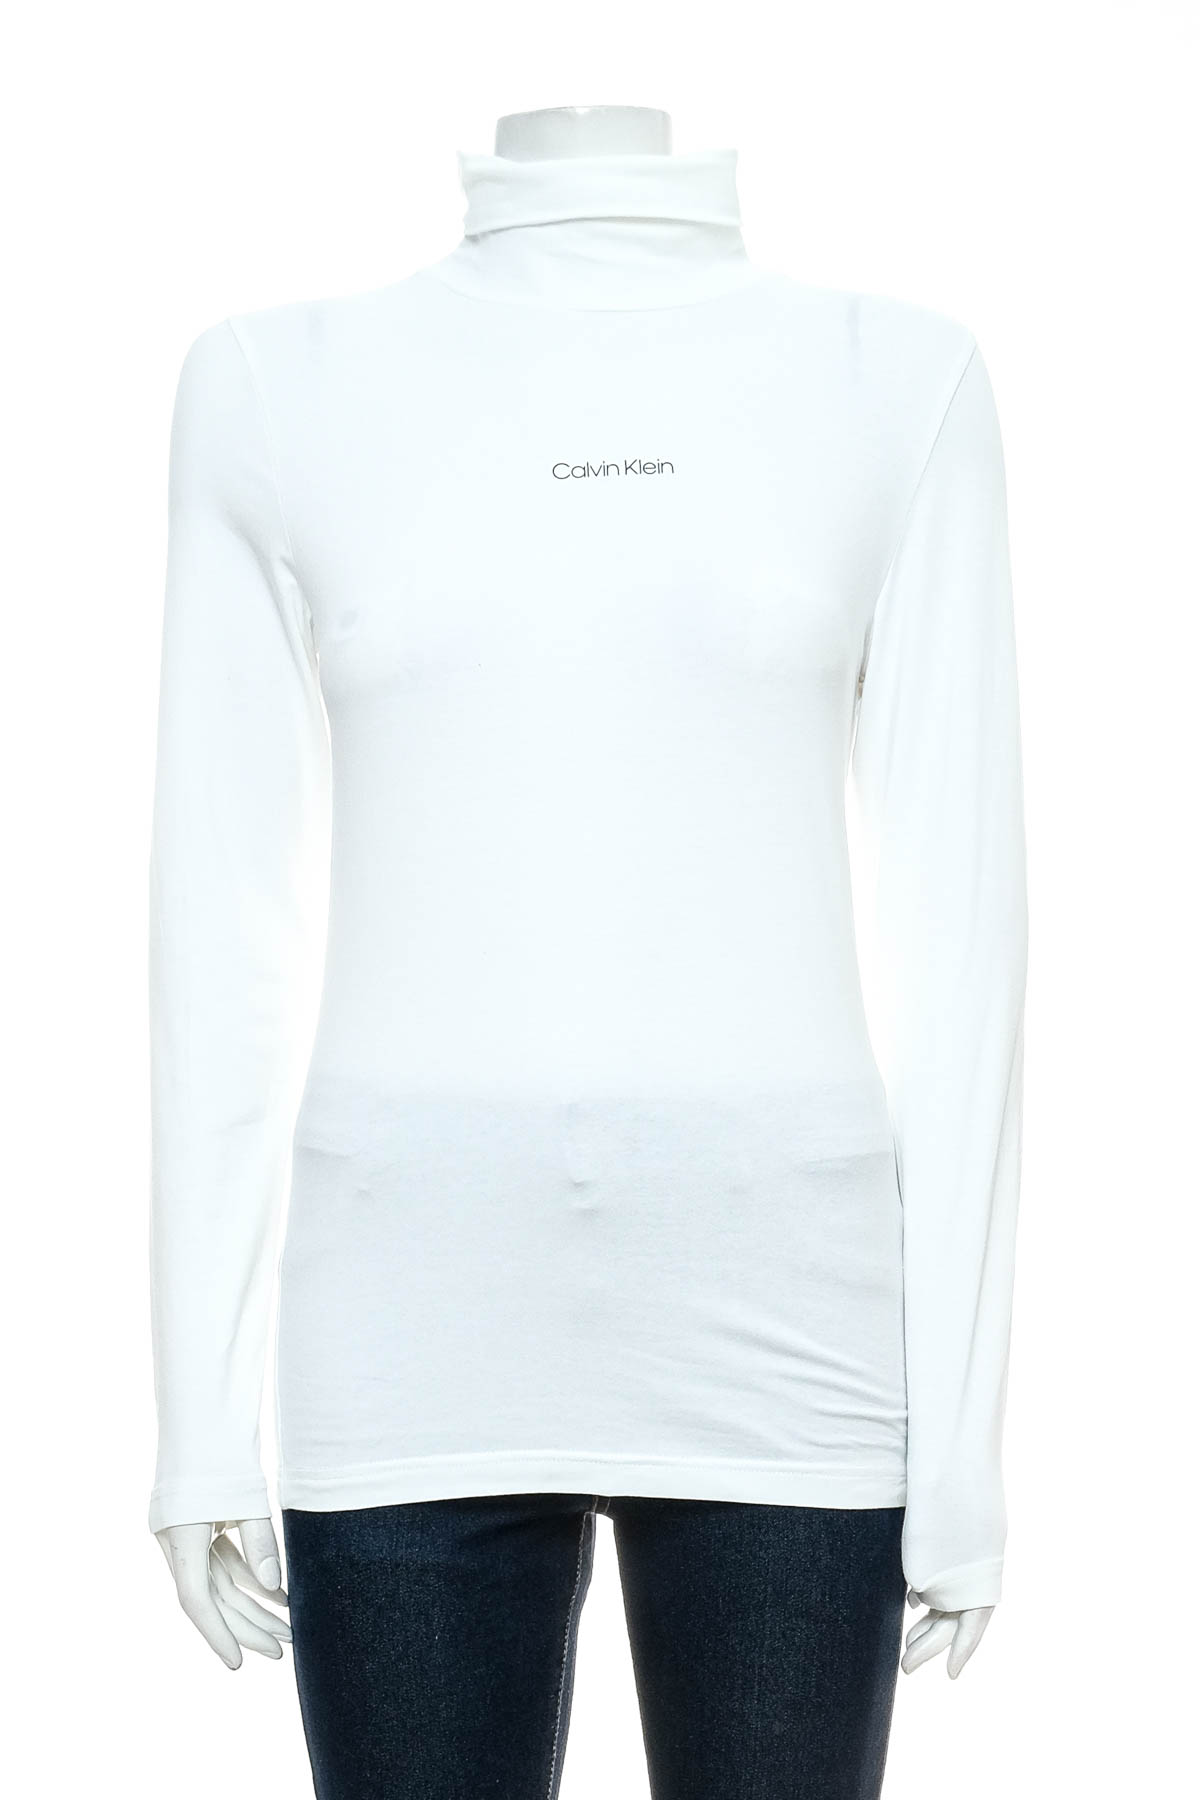 Дамска блуза - Calvin Klein - 0